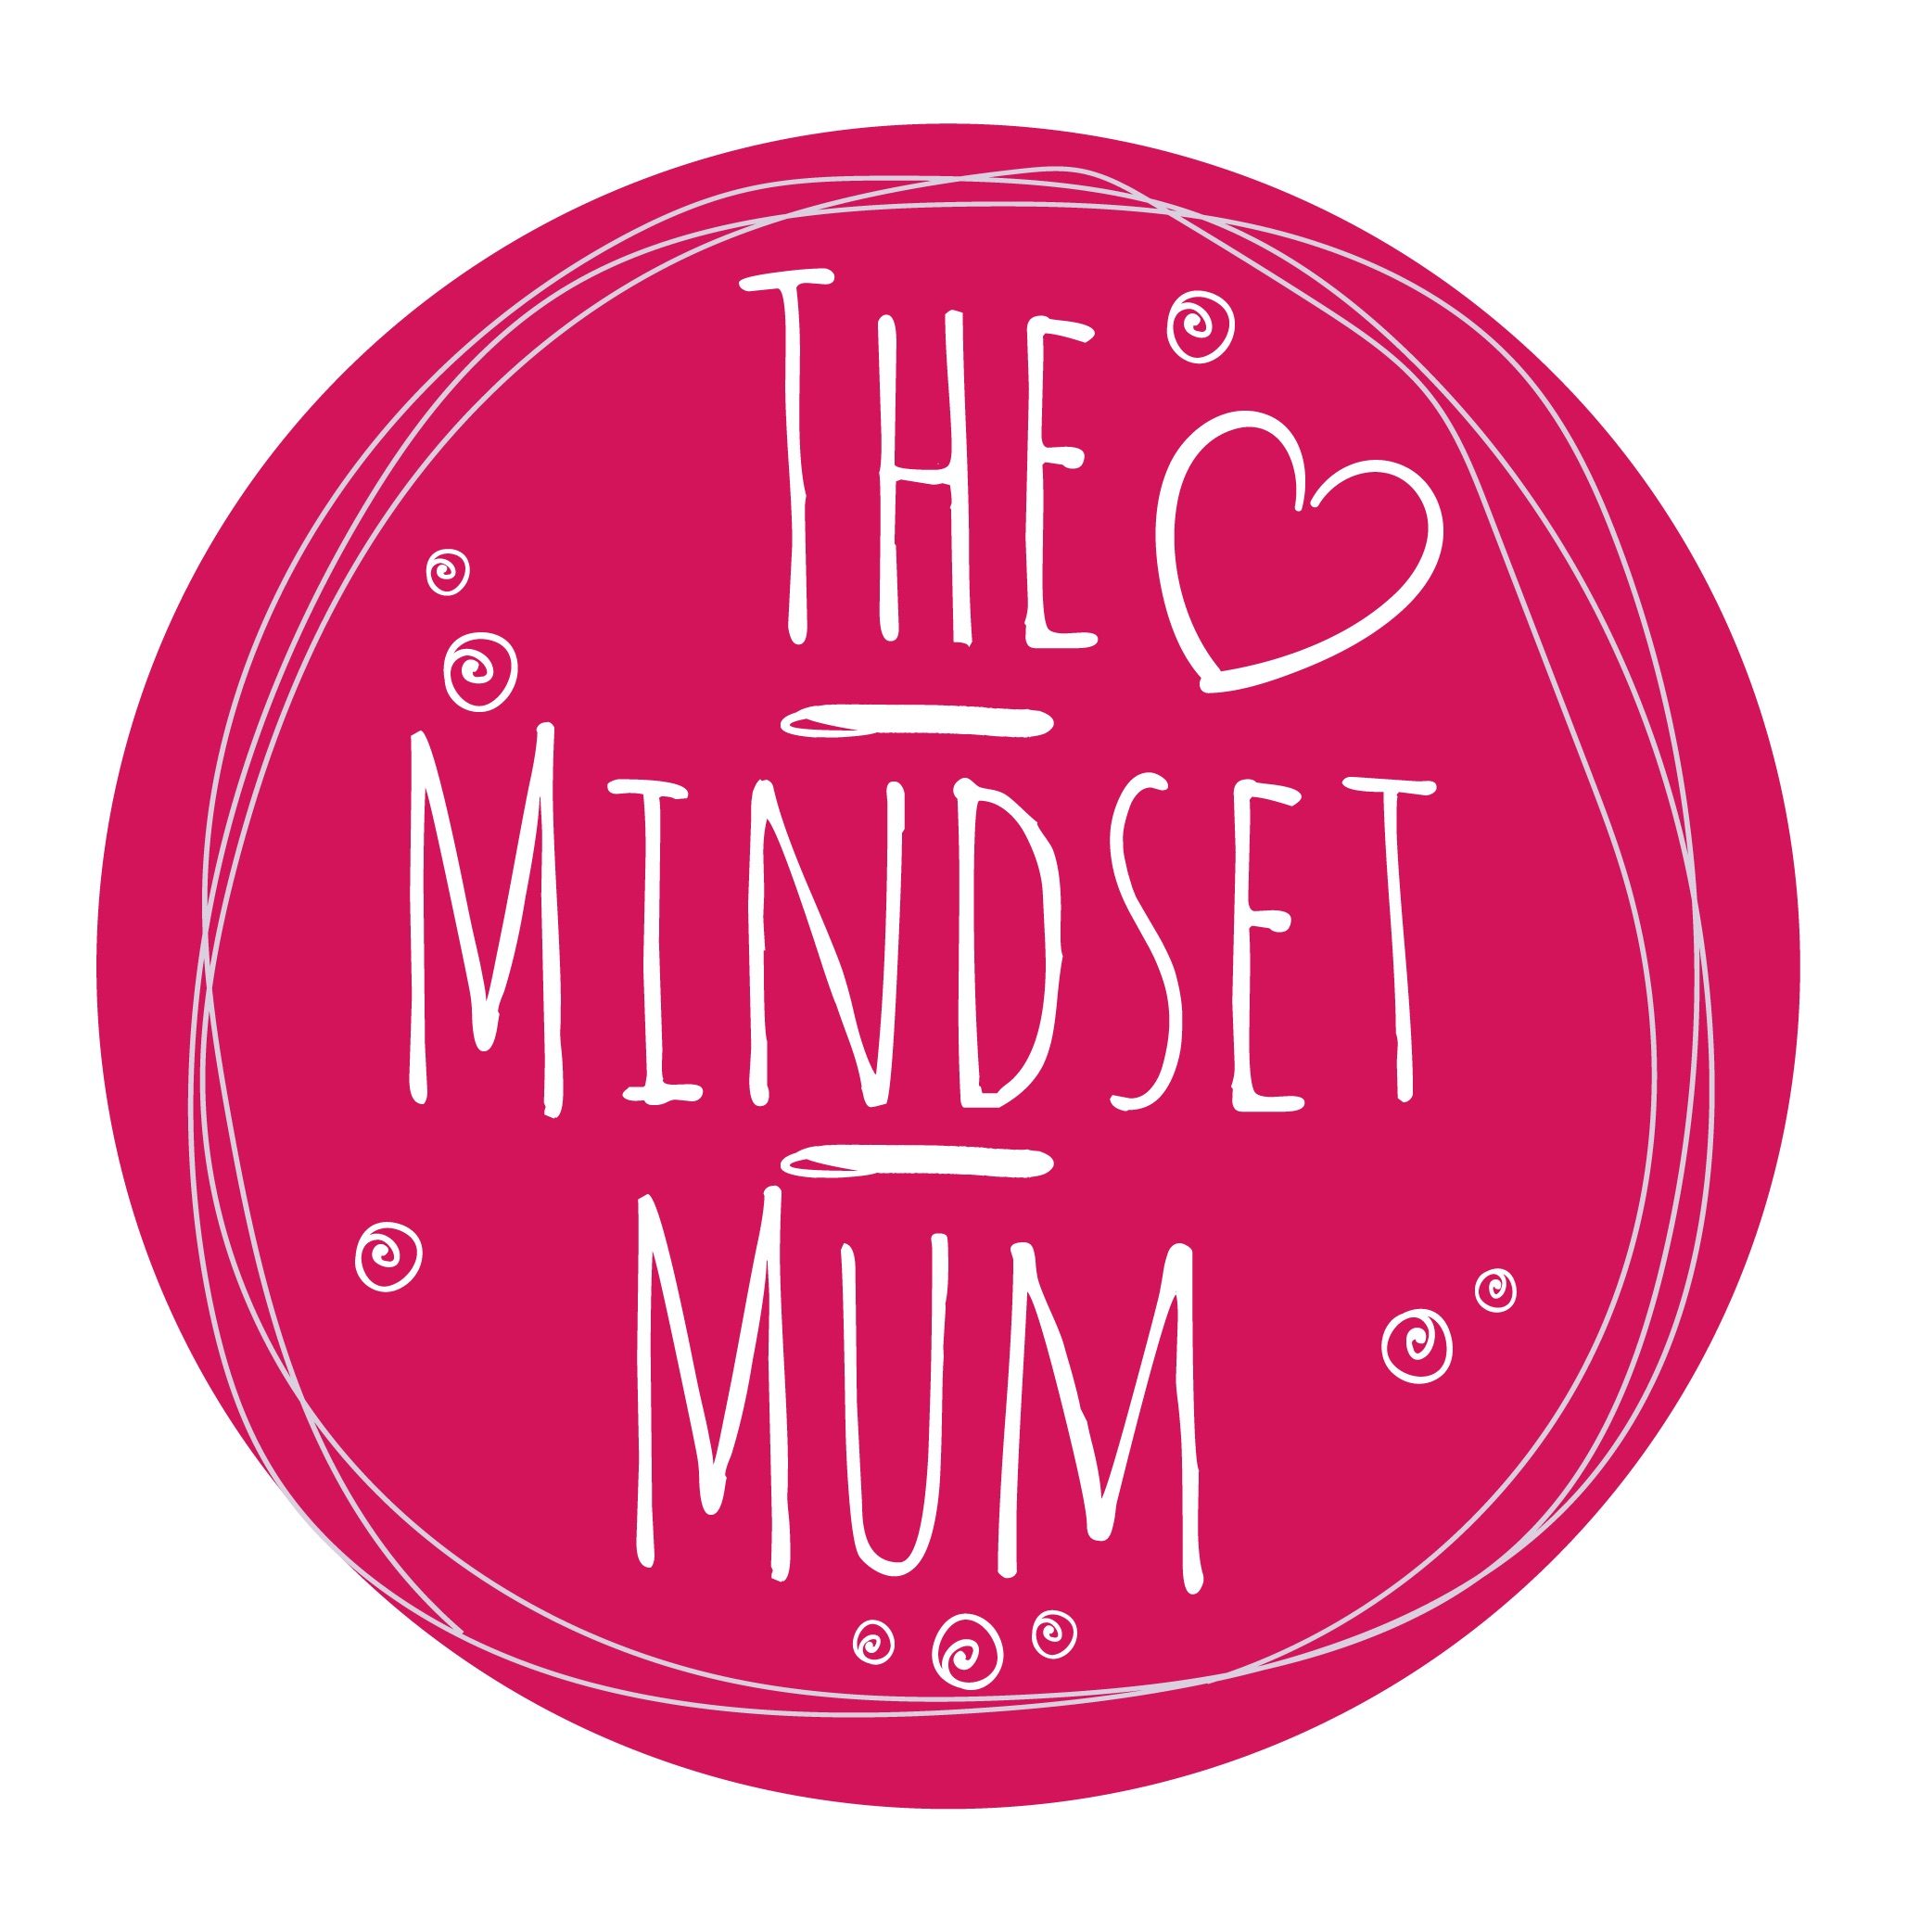 The Mindset Mum 